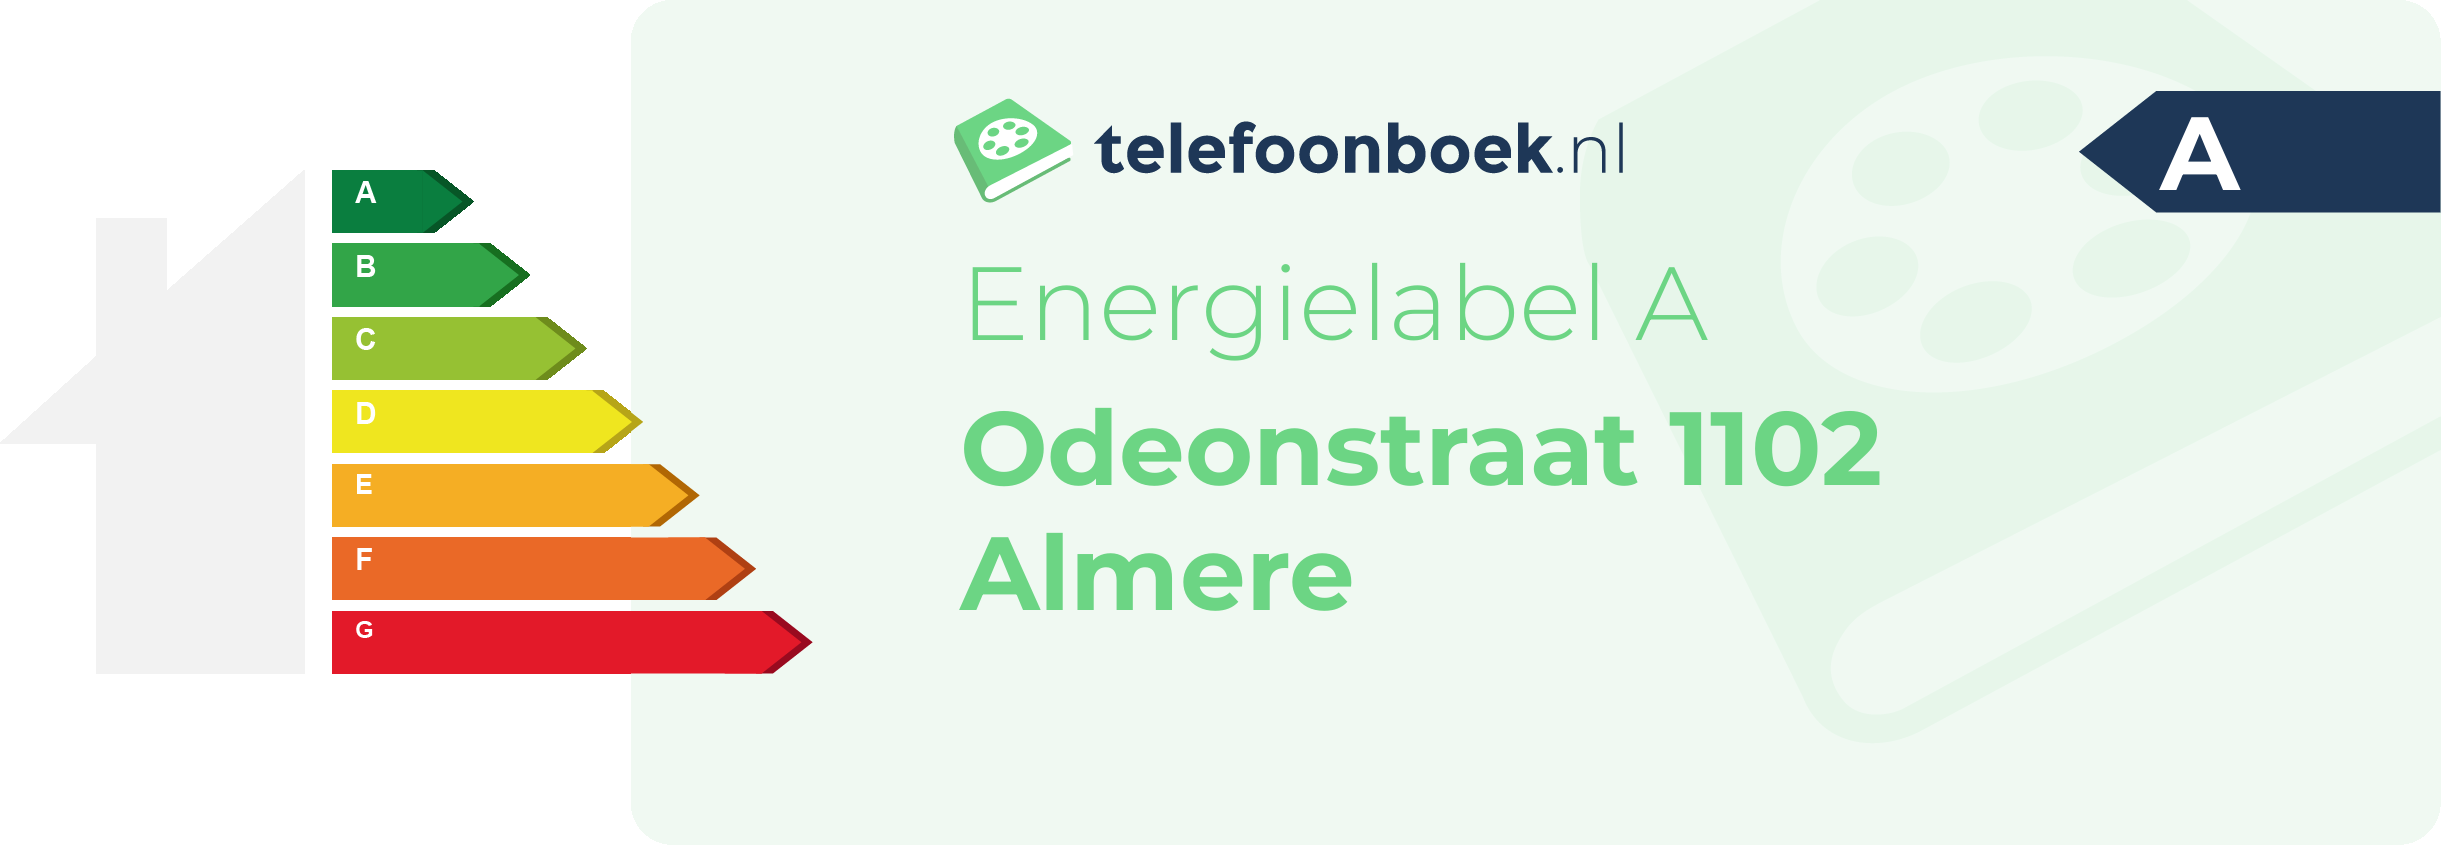 Energielabel Odeonstraat 1102 Almere